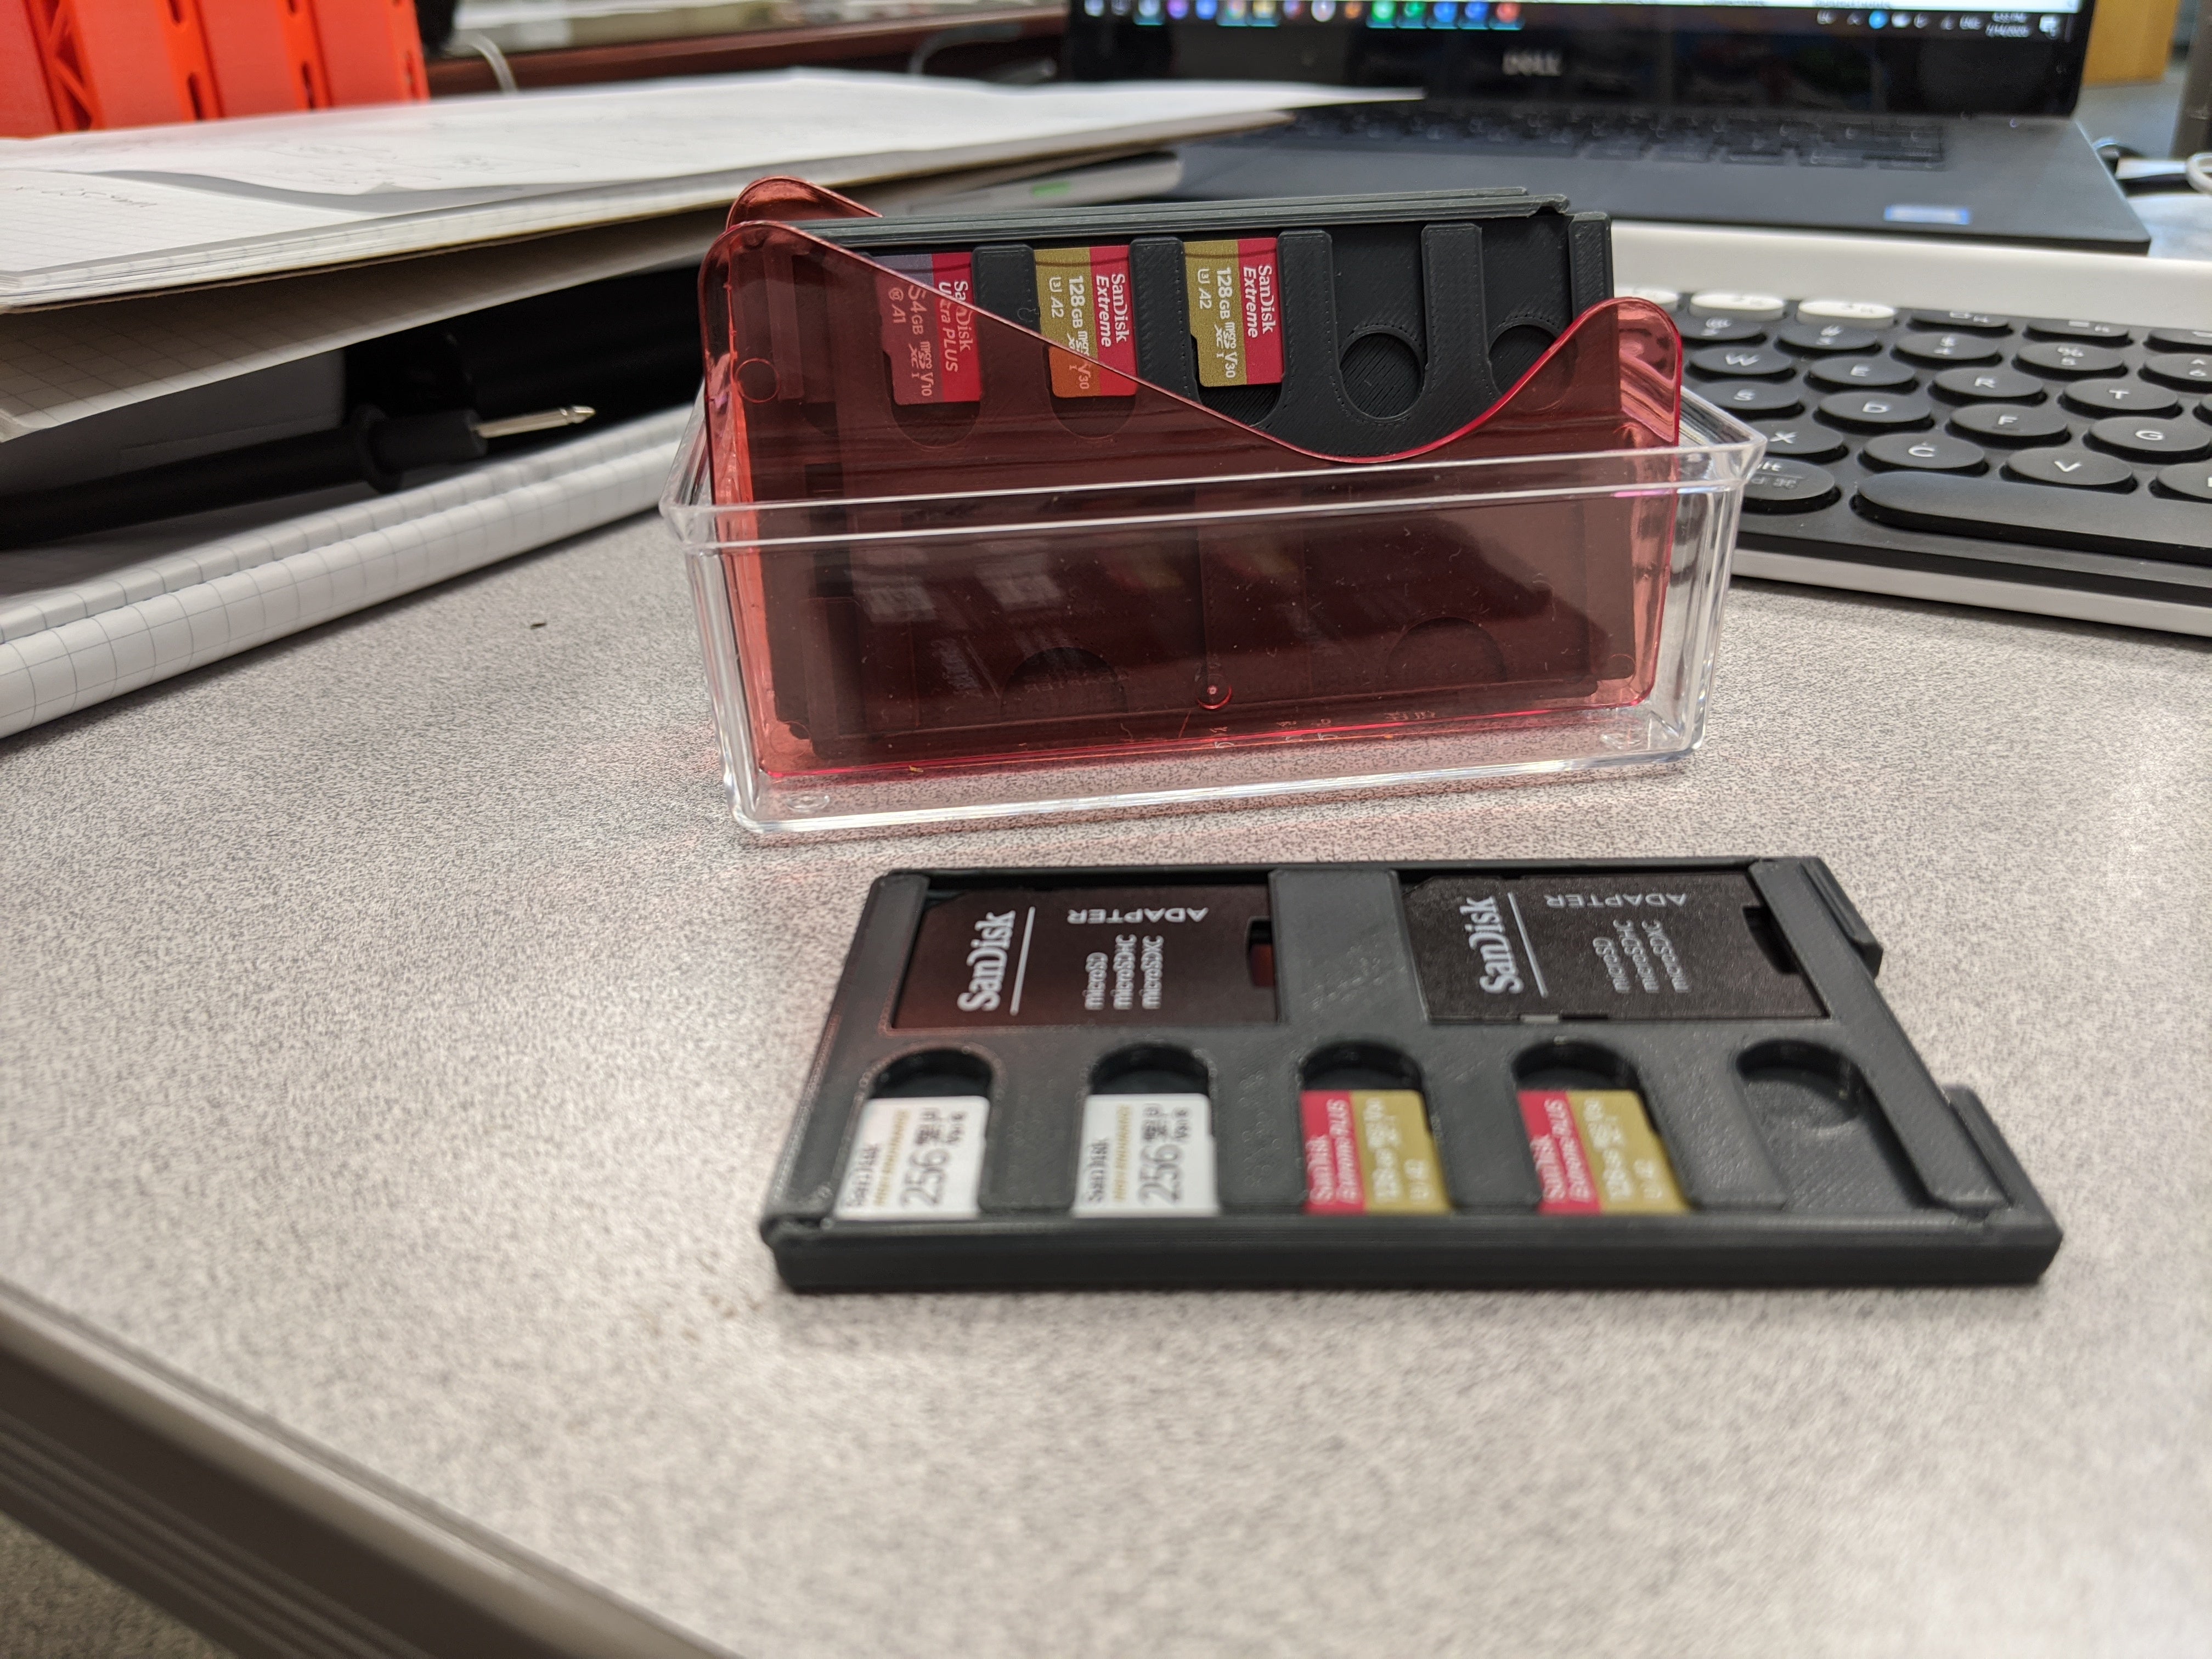 SD/MicroSD card case in credit card size